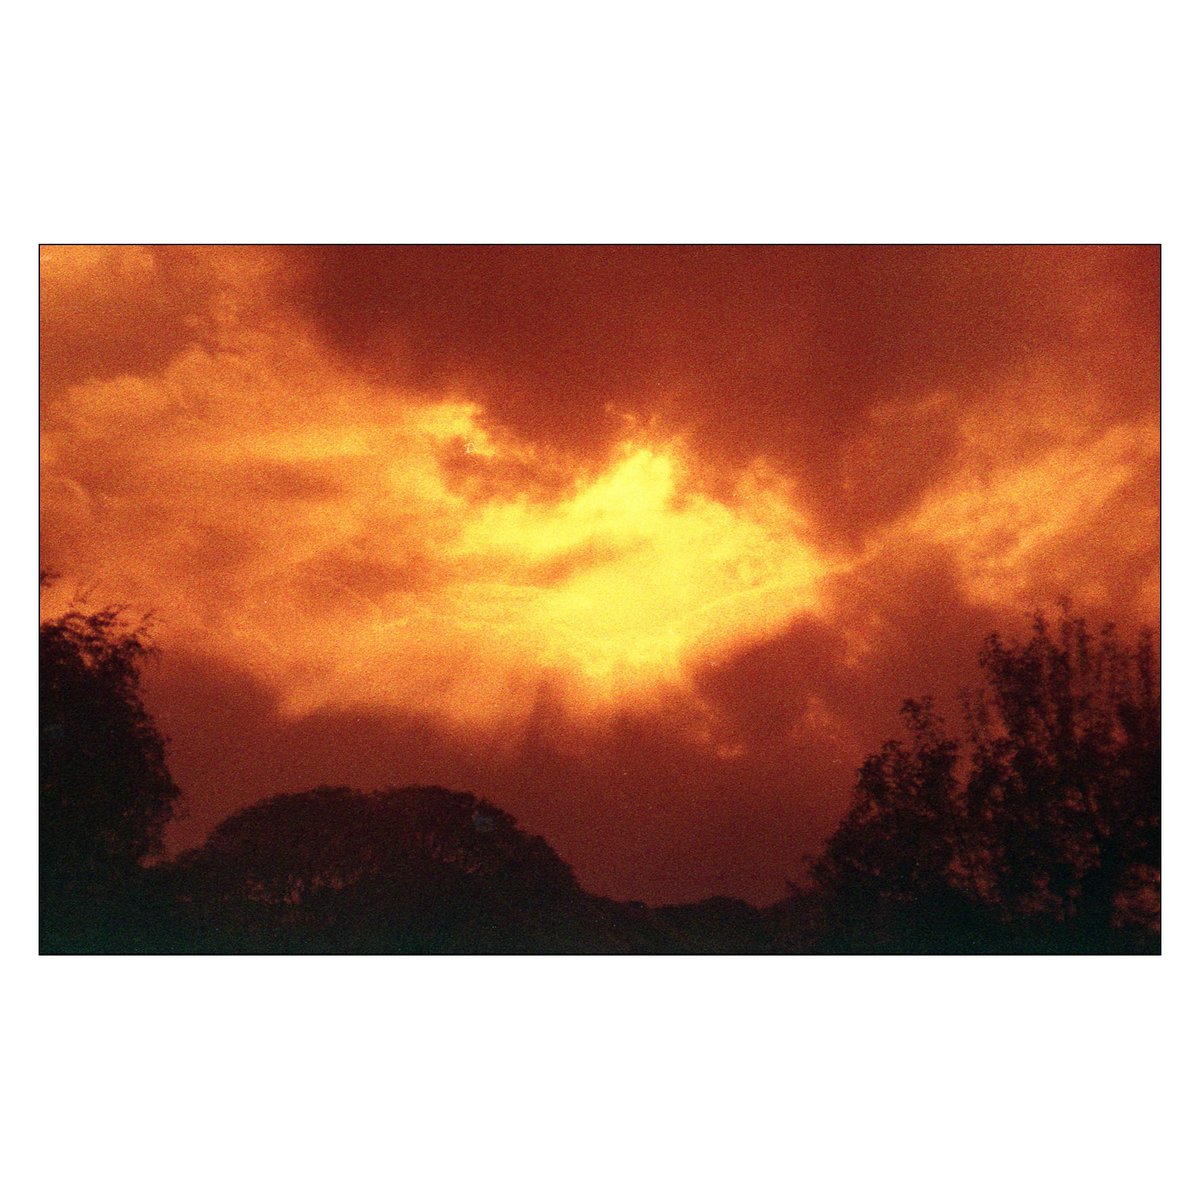 #colorfilmphotography #fotografiaanalogica #paesaggioitaliano #filmphotography #sunlights #nuages #nuvove #sole #c41 #fotografiaanaloga #pratosesia